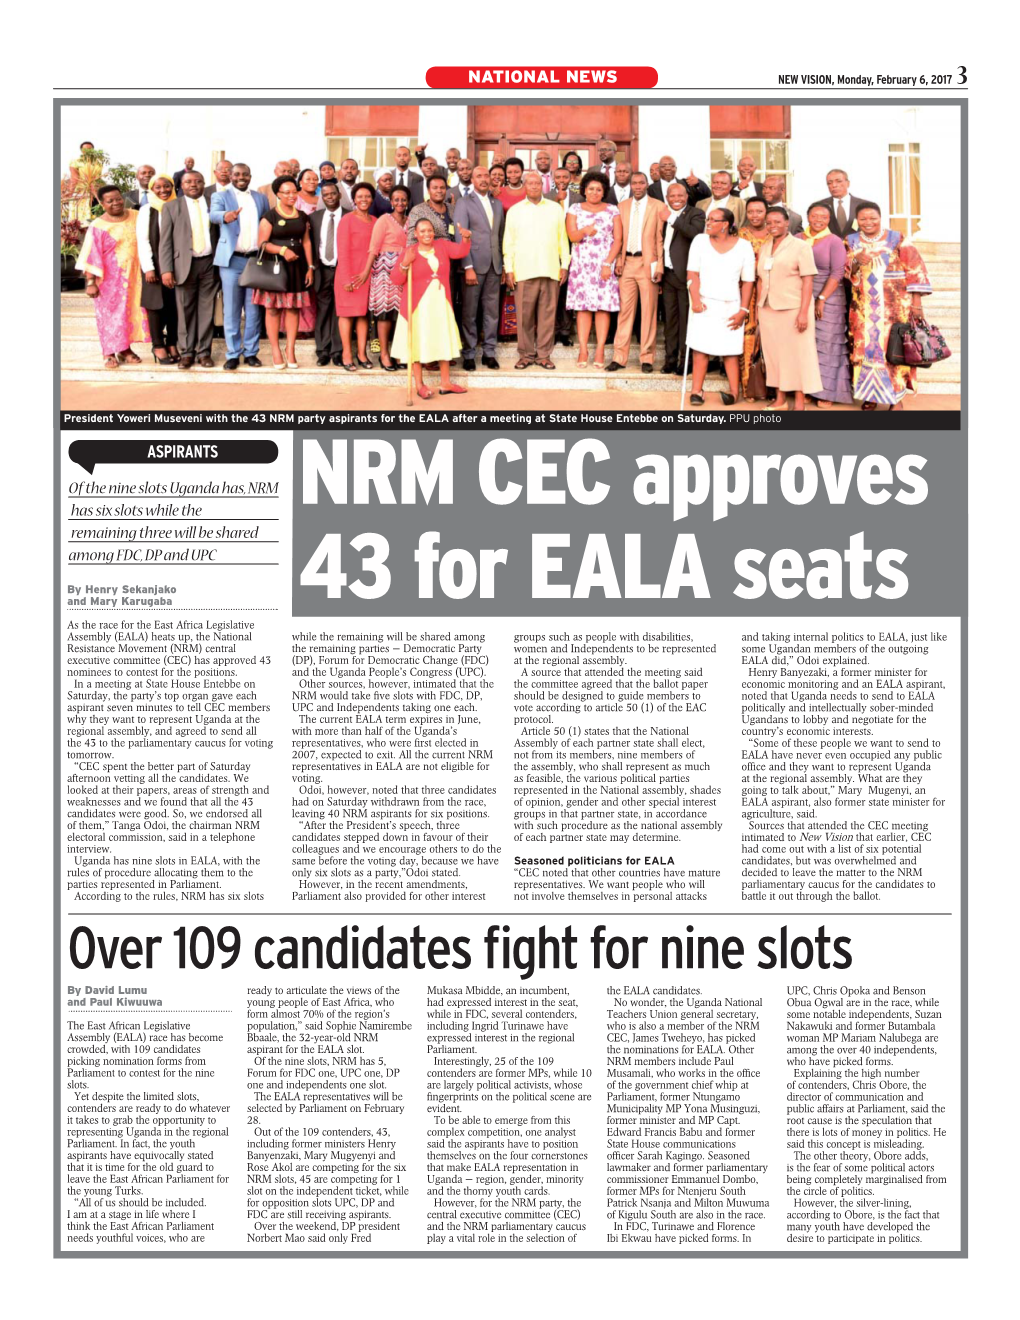 NRM CEC Approves 43 for EALA Seats